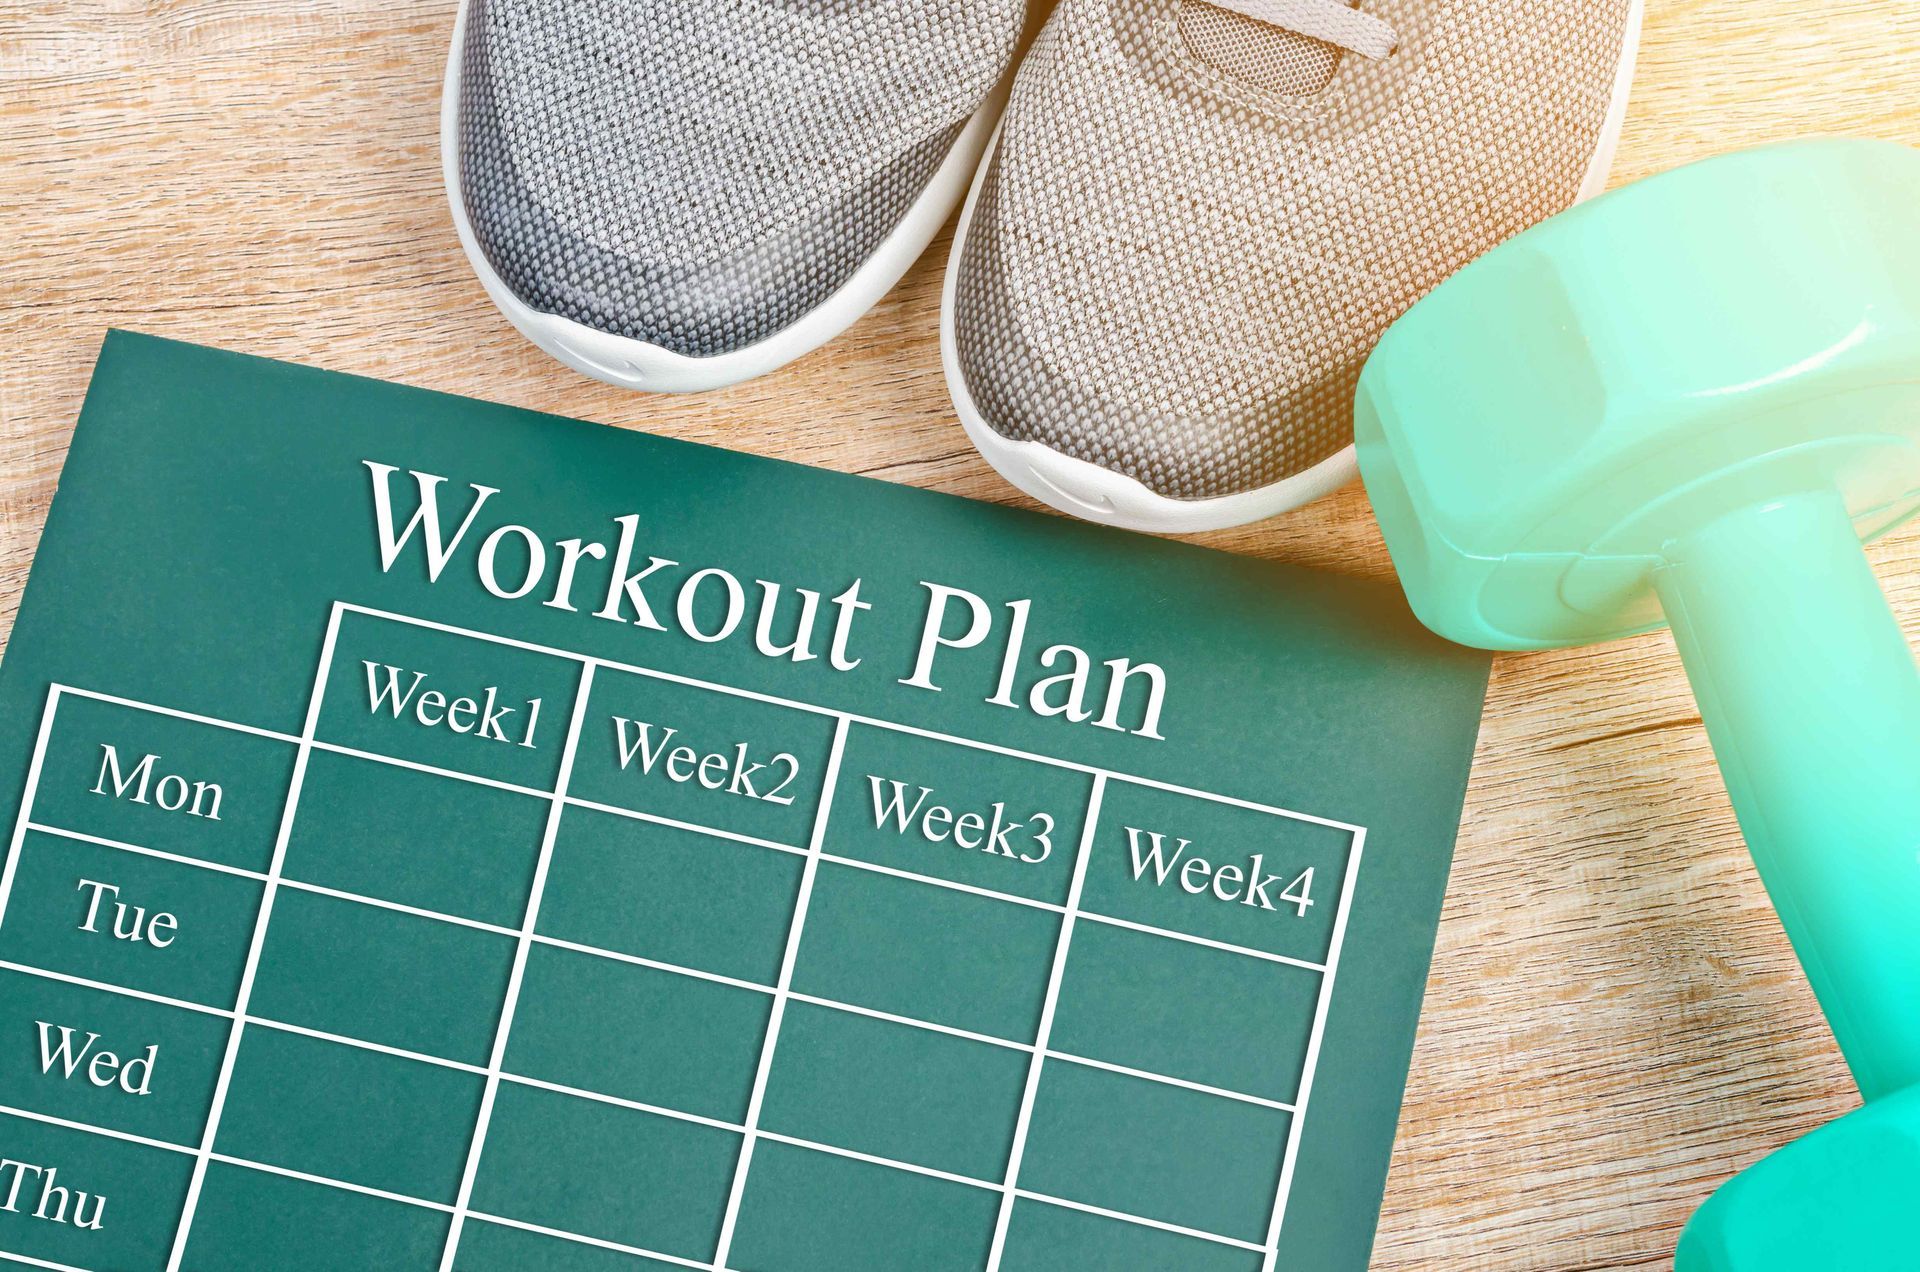 New Workout Plan Image